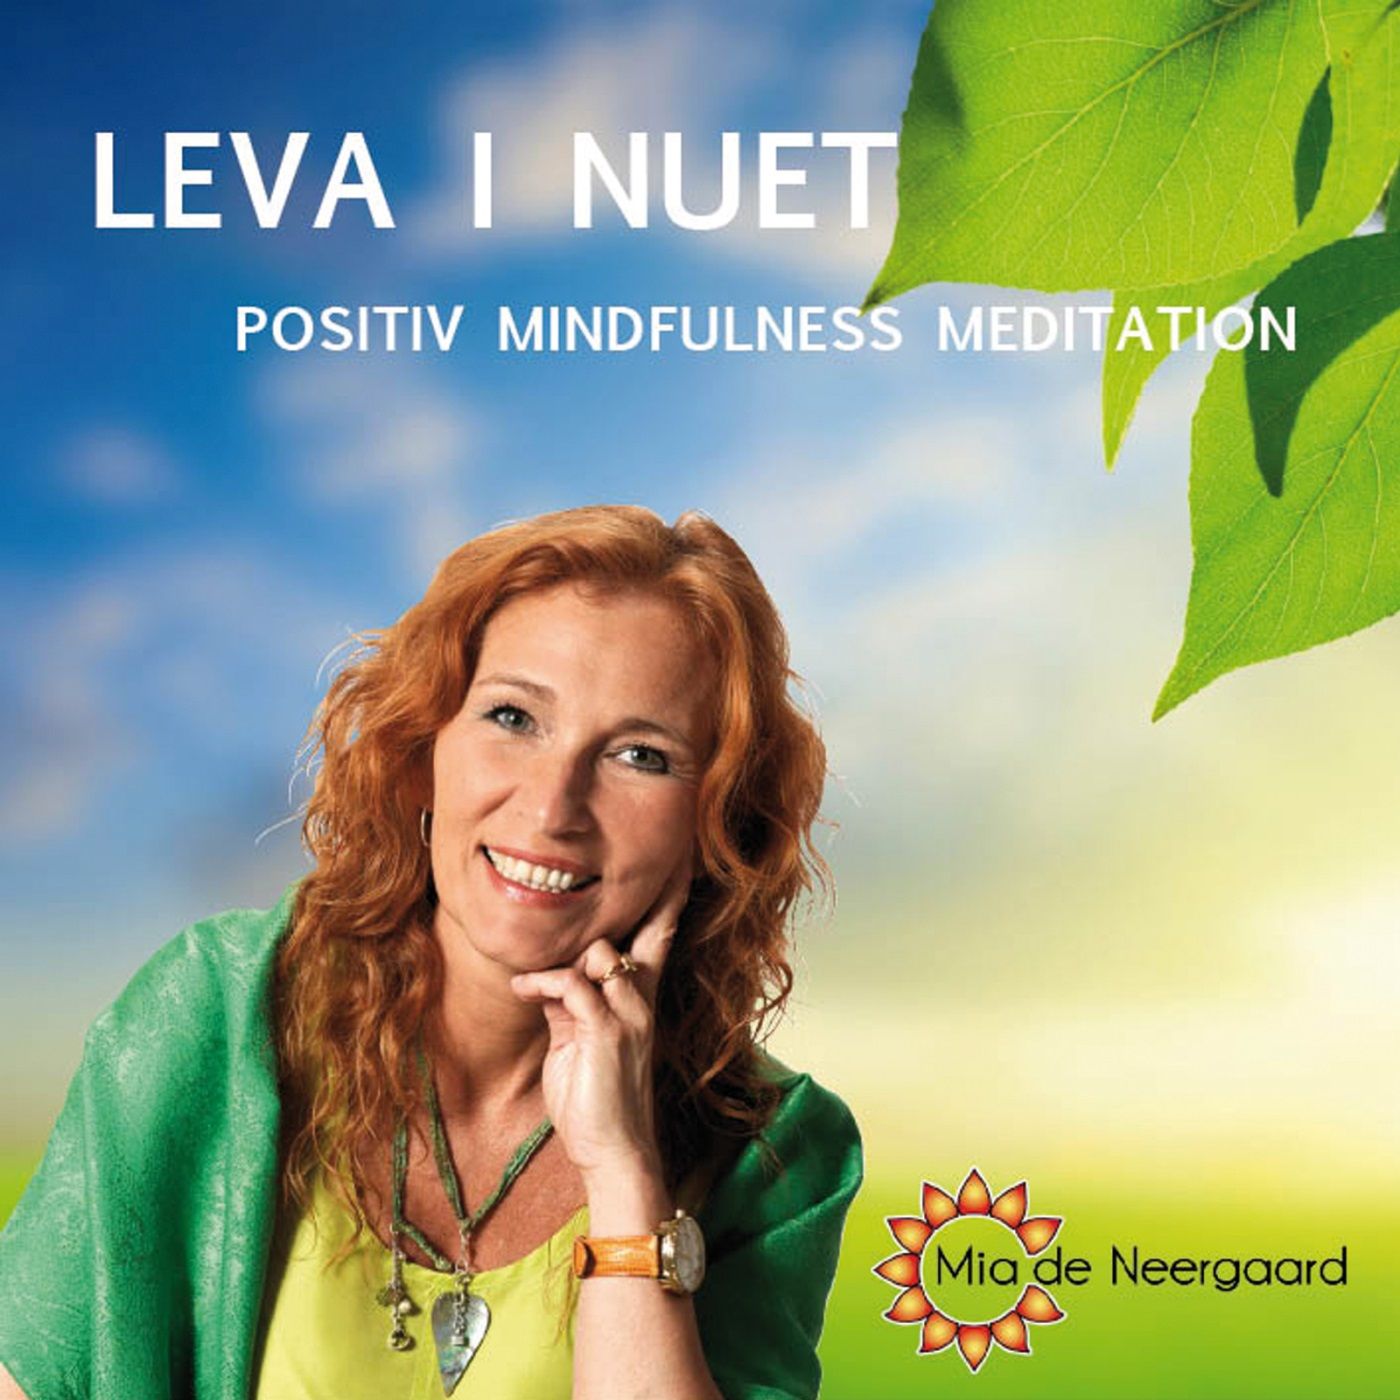 Leva i nuet : positiv mindfullness meditation, lydbog af Mia de Neergaard